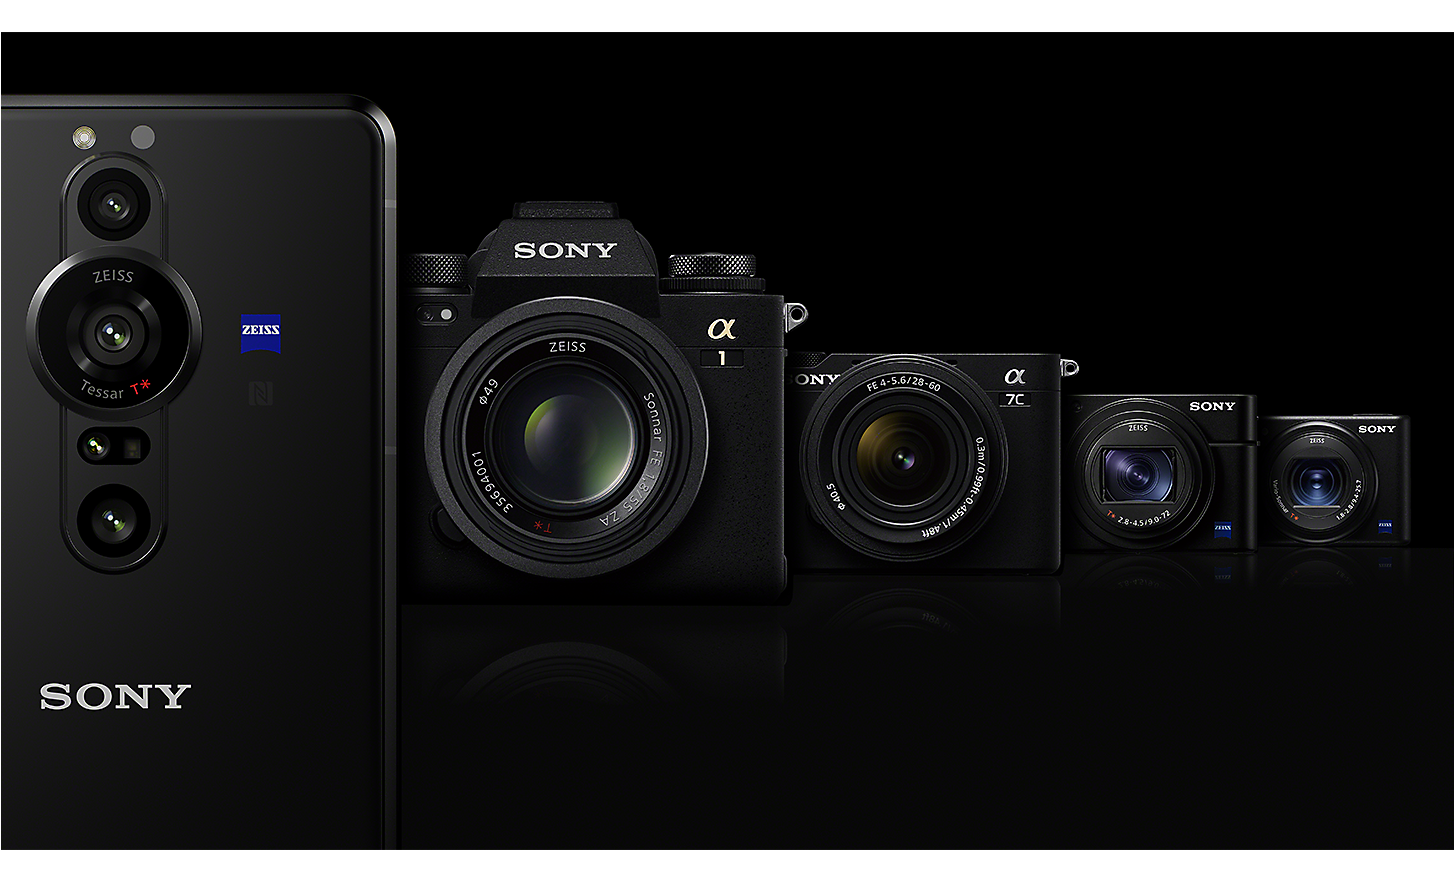 Xperia PRO-I ควบคู่ไปกับรุ่นอื่นๆ อีก 4 รุ่นในหมวดกล้อง Sony